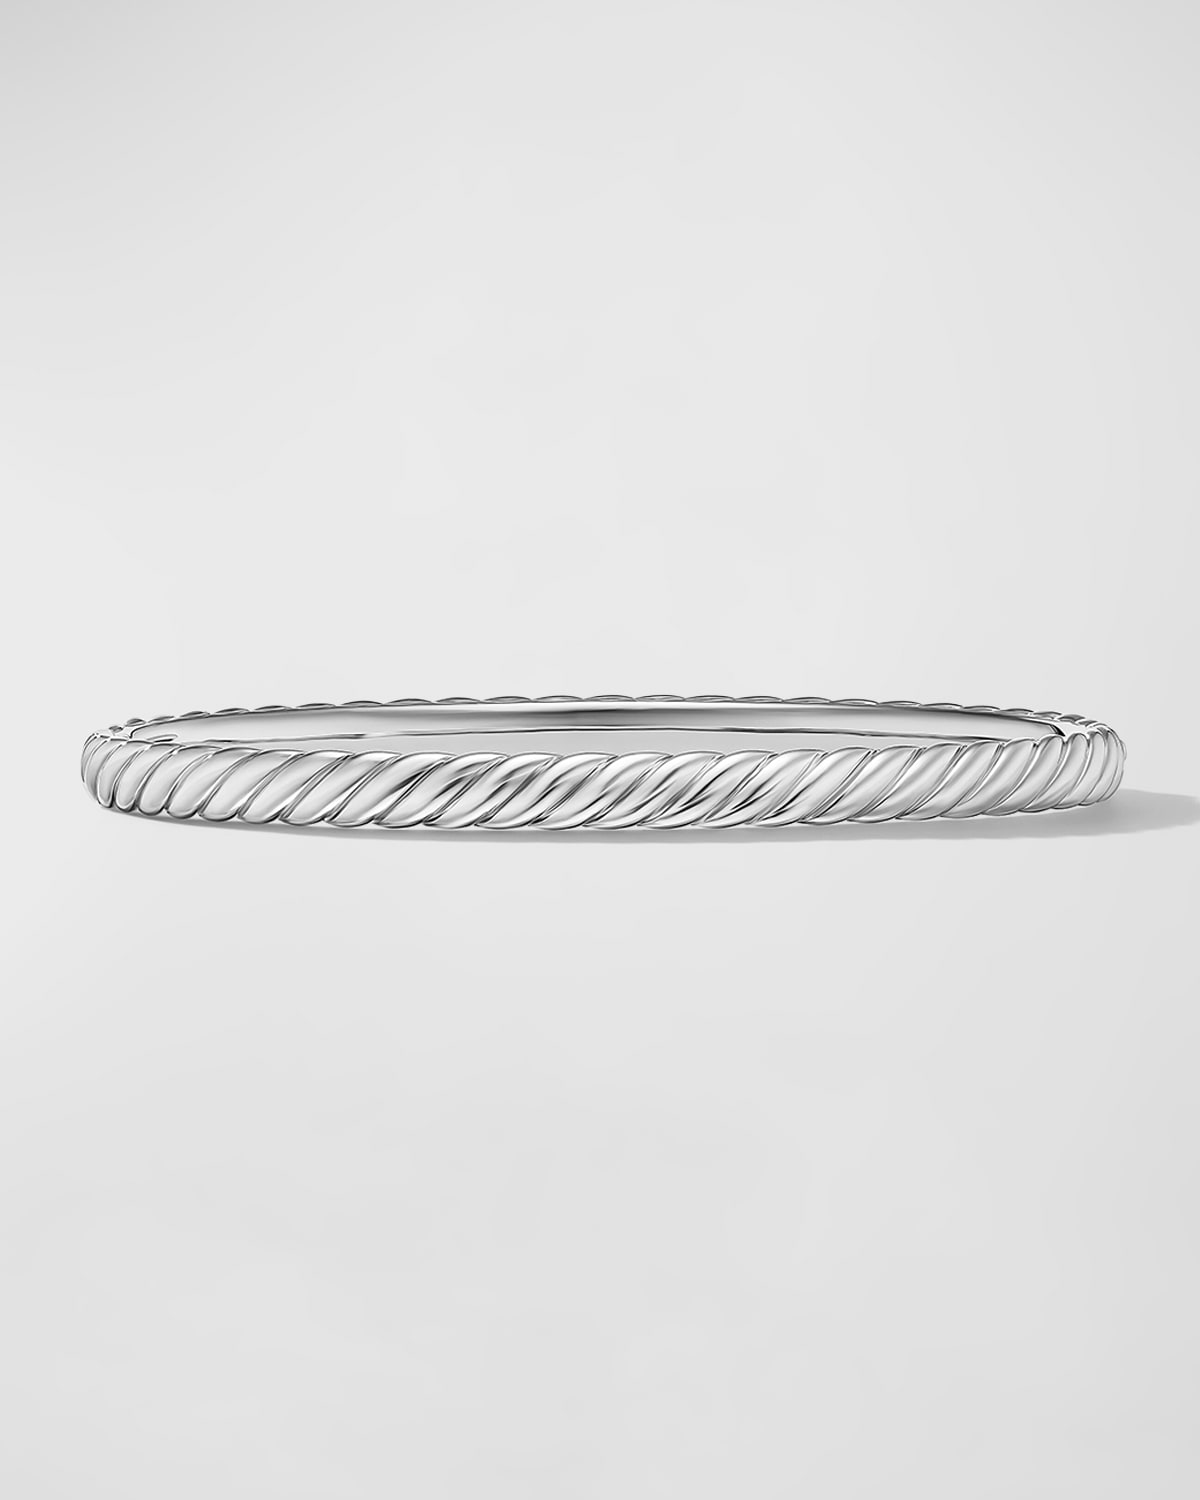 David Yurman Sculpted Cable Bracelet in 18K White Gold, 4.5mm, Size L